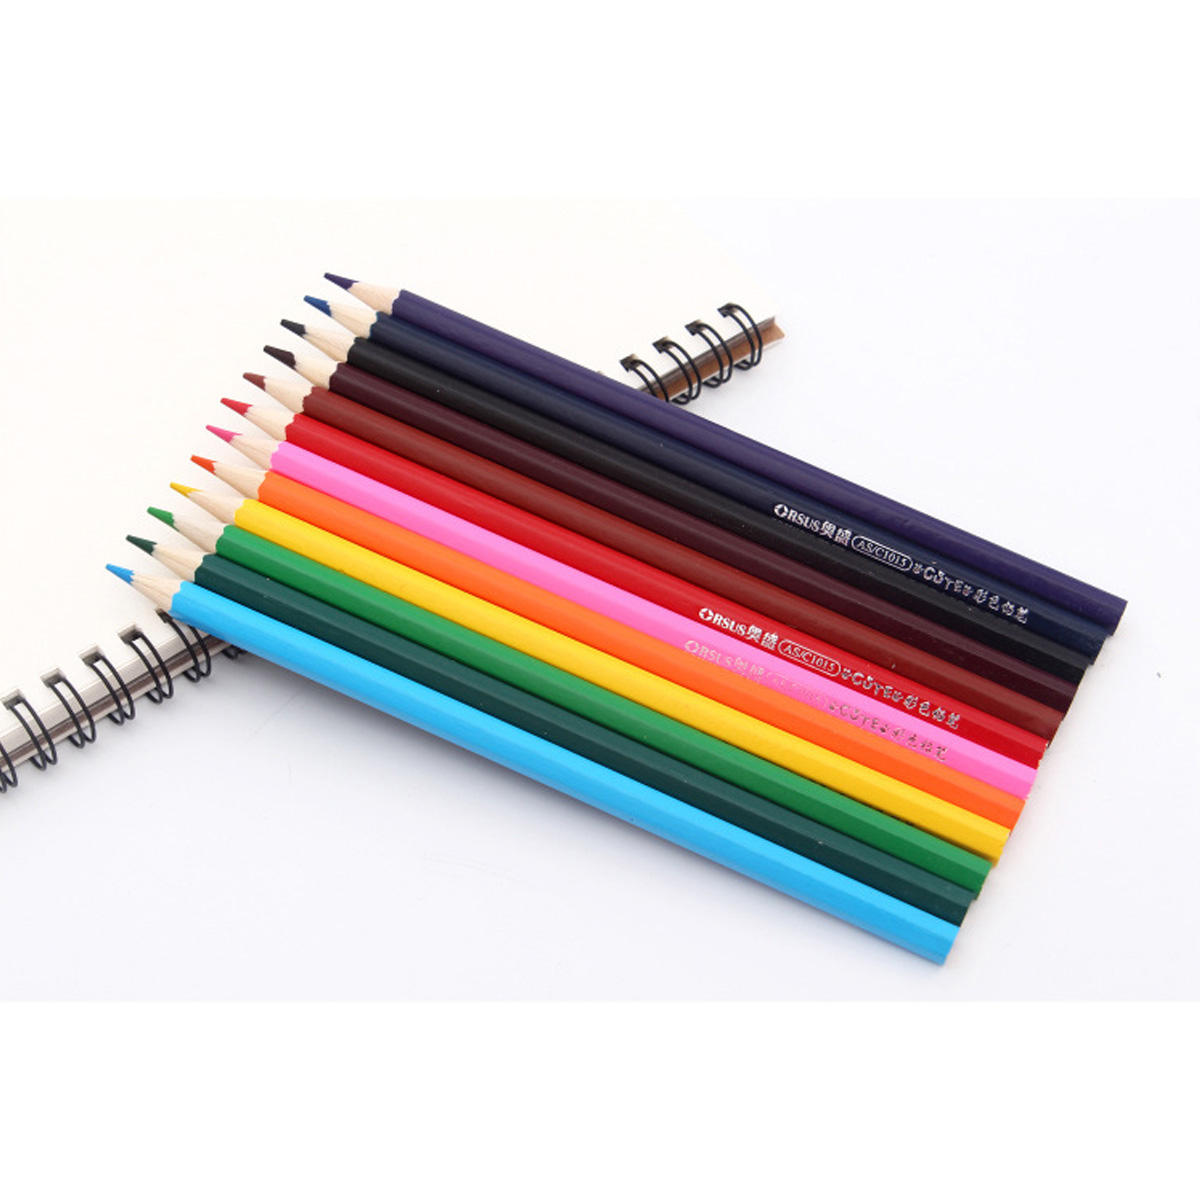 

12 Colors Colored Pencils Set Artist Painting Sketching Wooden Professional Oil Color Pencil School Art Supplies